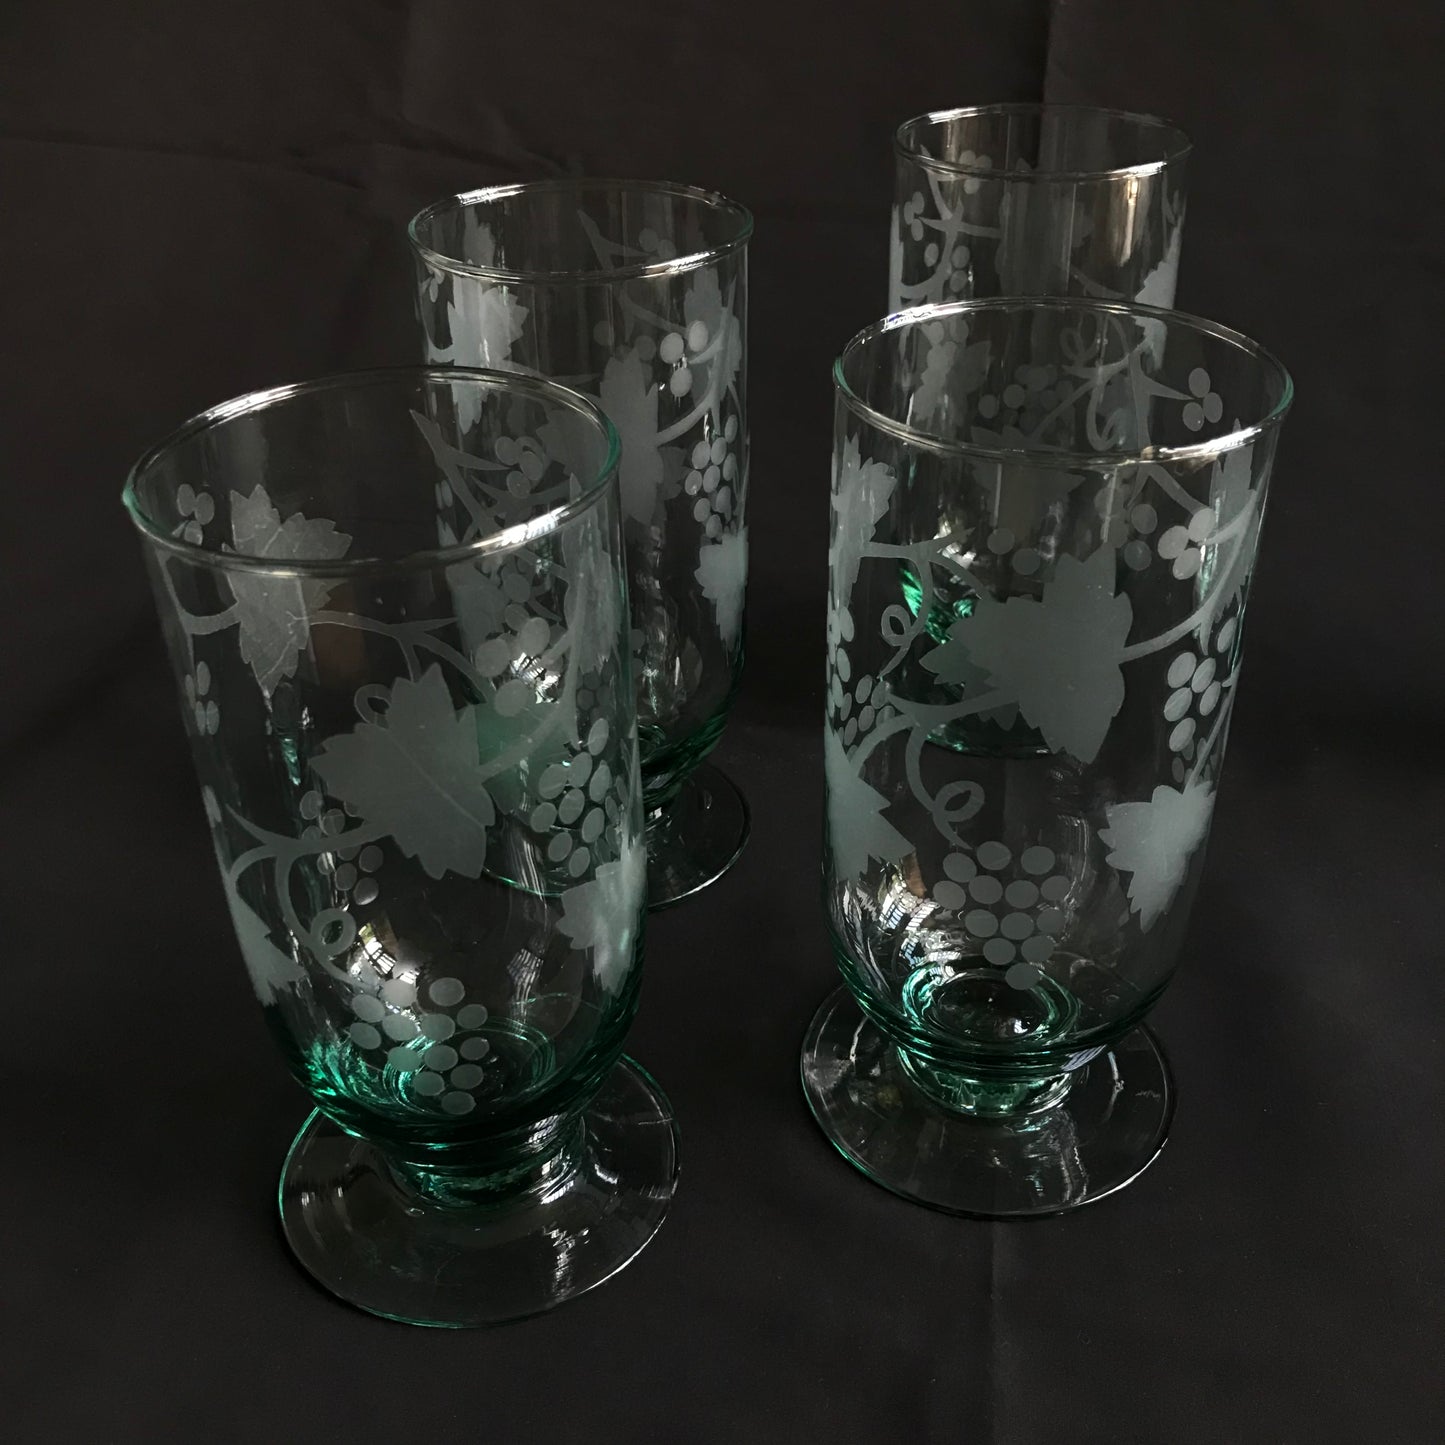 Water Glasses with Vine Leaf design